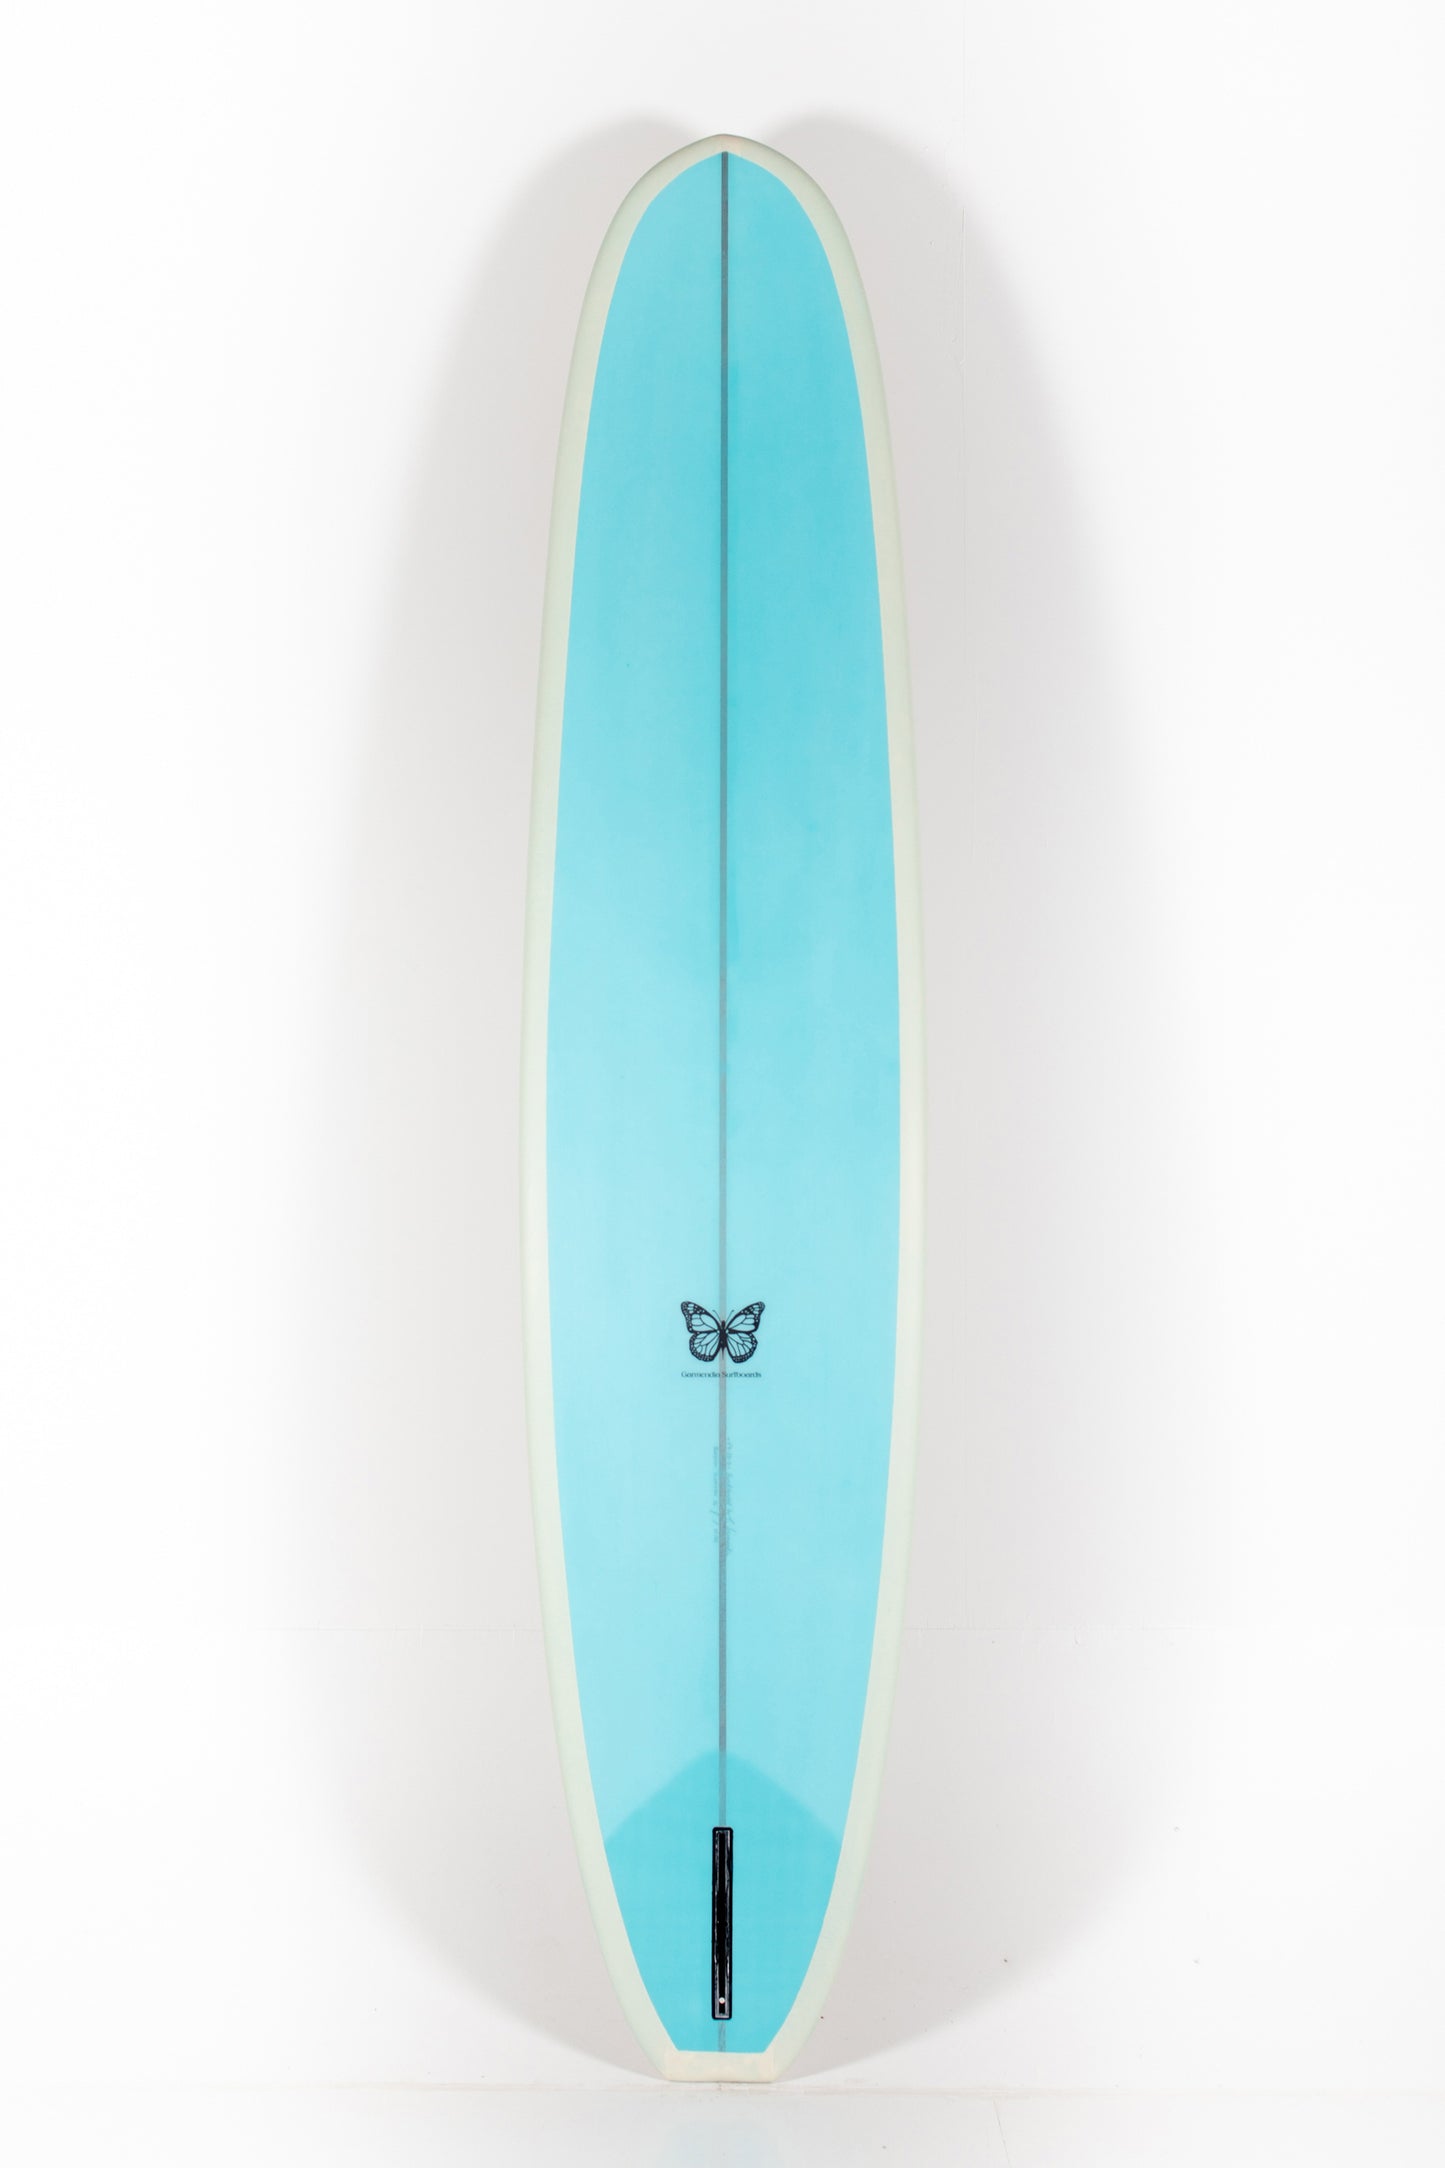 Pukas Surf Shop - Garmendia Surfboards - BULLET - 9'4" x 23 x 3 - Ref.GARMENBULLET9.4